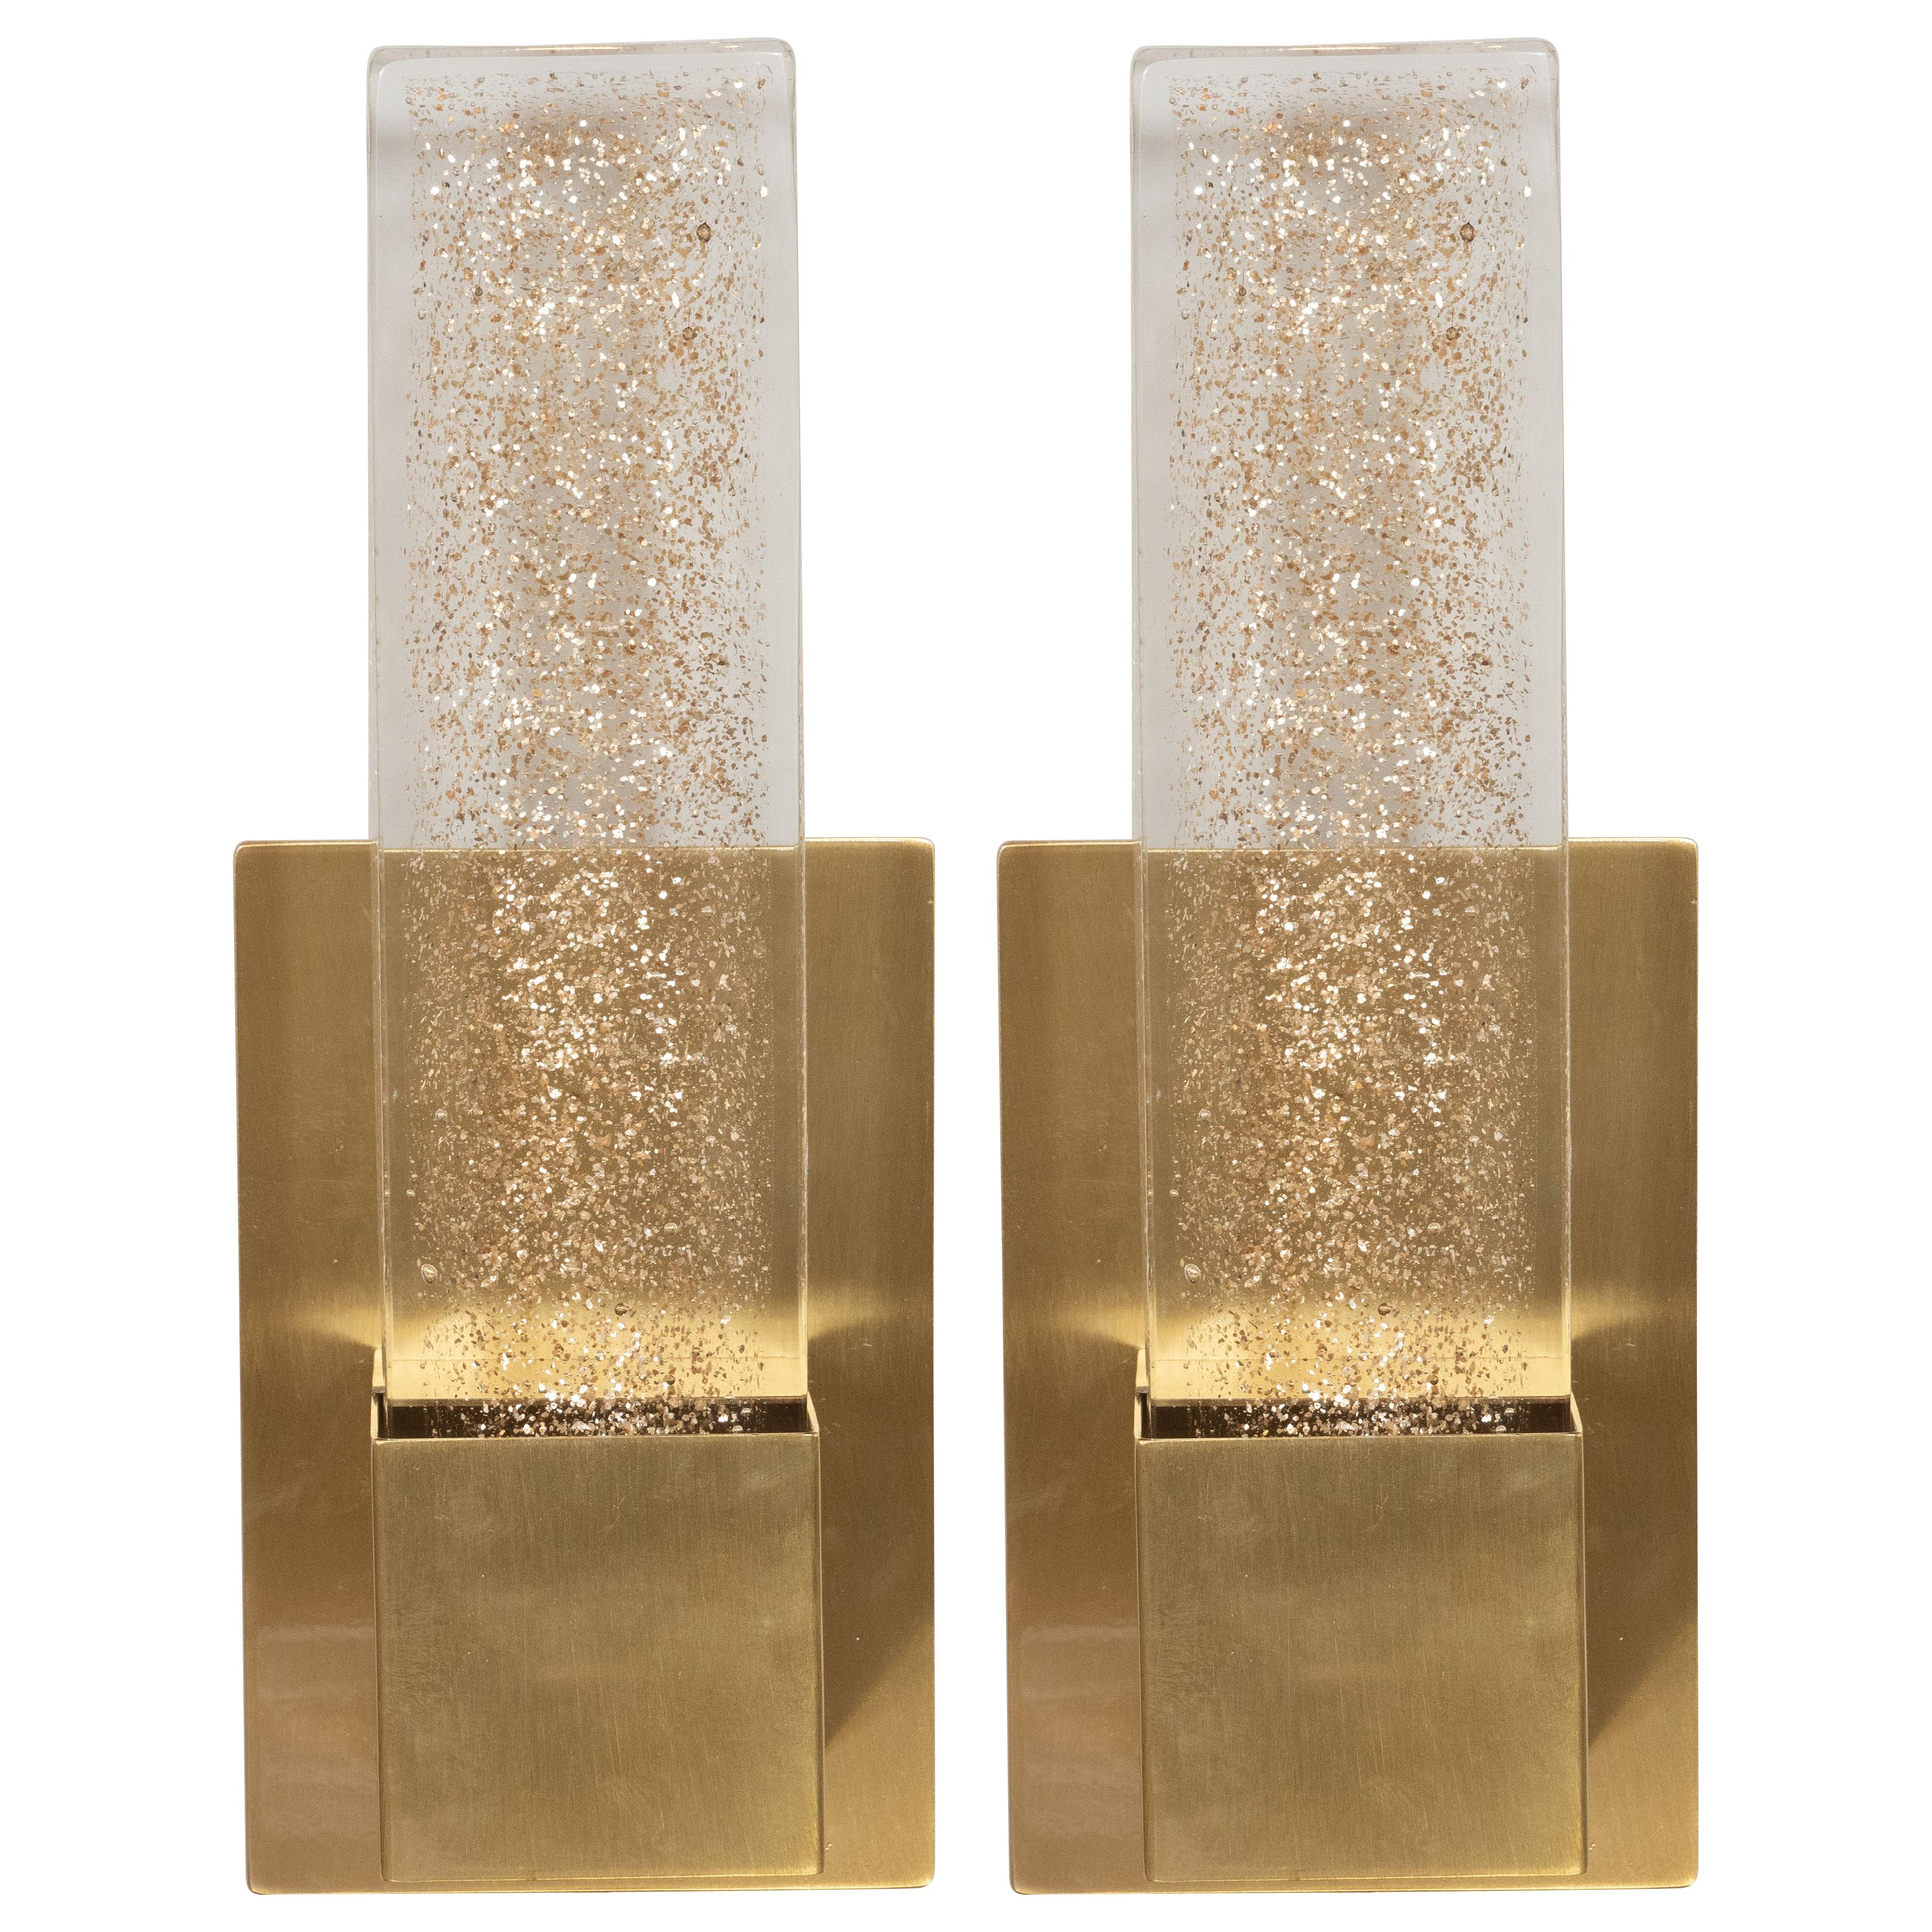 Pair of Handblown Murano Glass & Brushed Brass Sconces with 24-Karat Gold Flecks